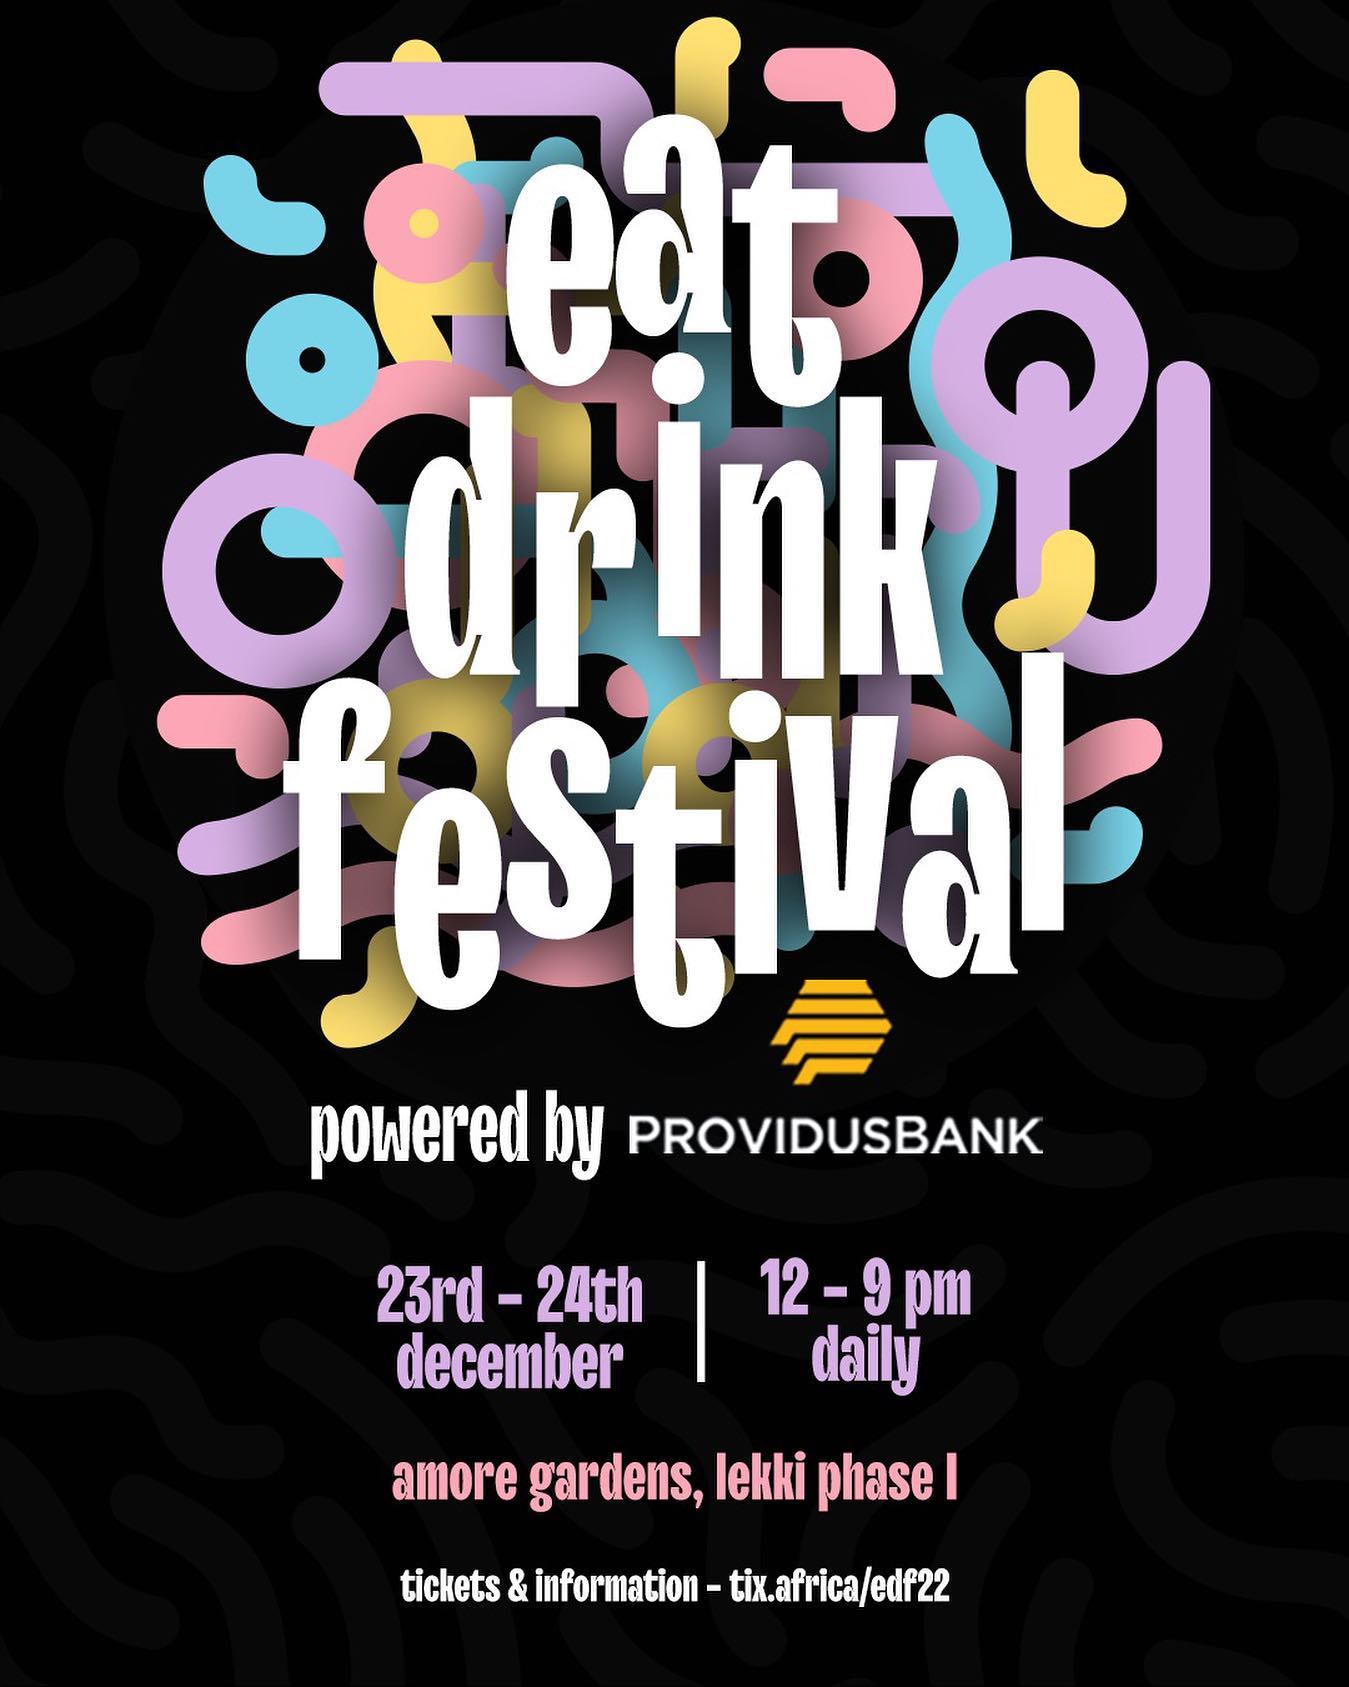 EatDrinkFestival Lagos December 2022 | Eat Drink Festival Lagos 8 December 2022 Lagos Events Guide December